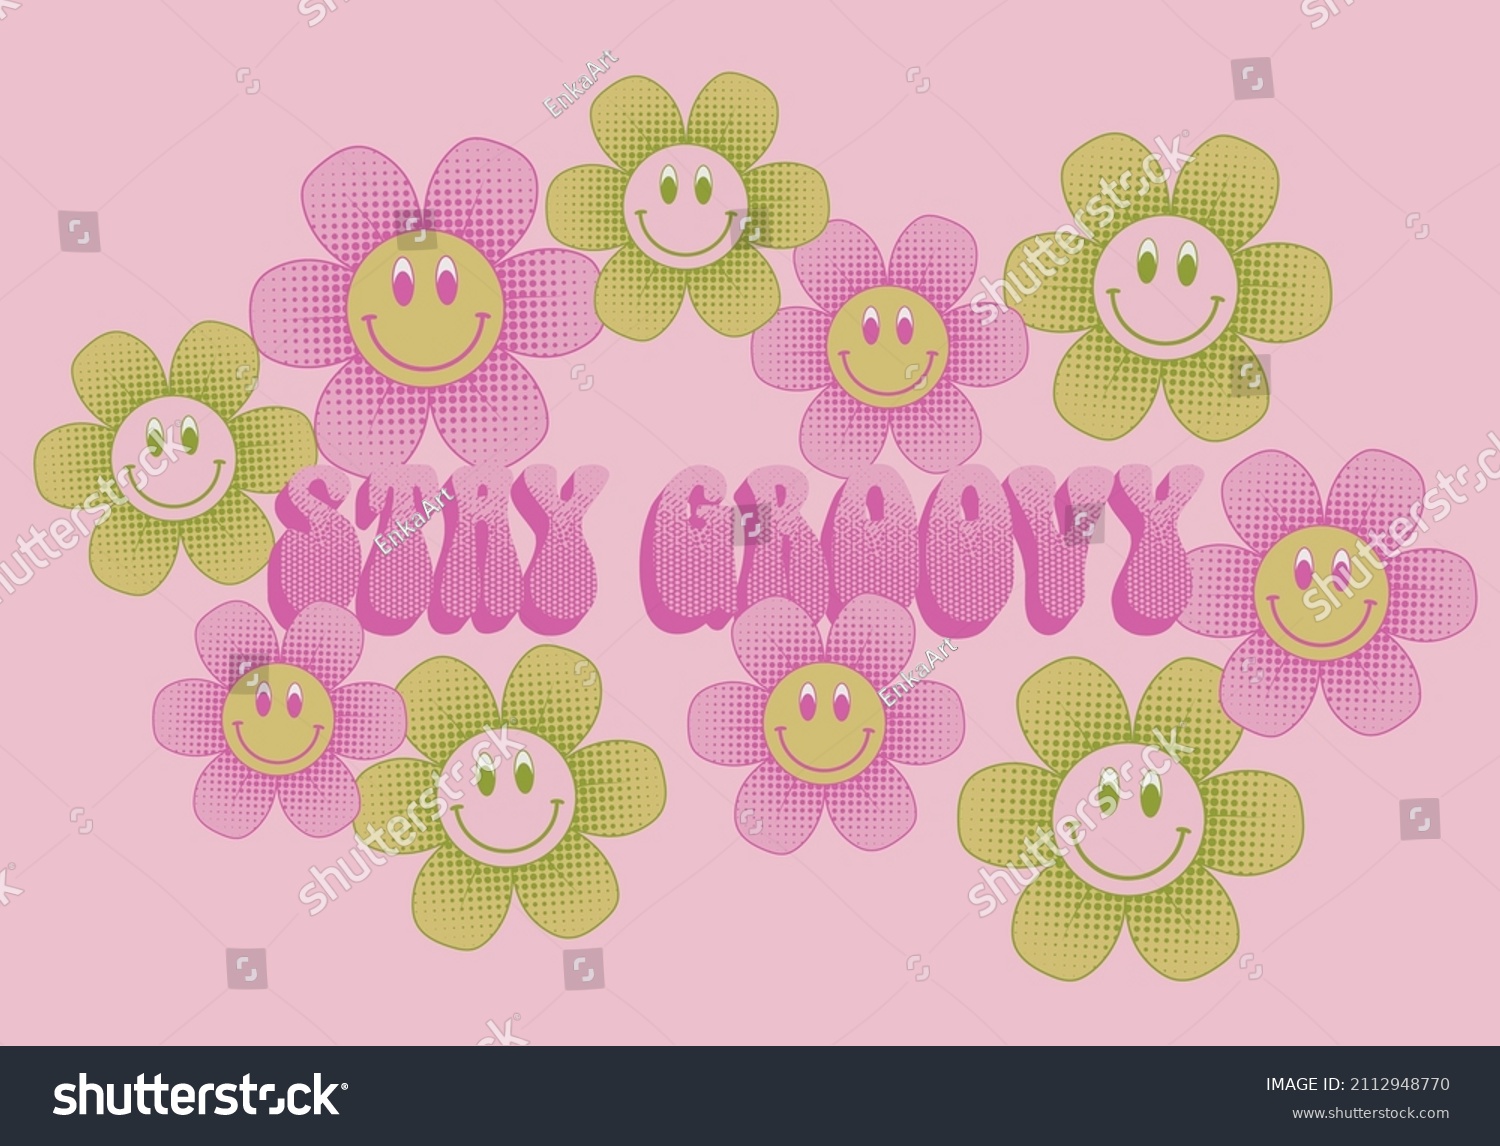 70s Retro Smiling Daisy Flower Illustration Stock Vector Royalty Free 2112948770 9136